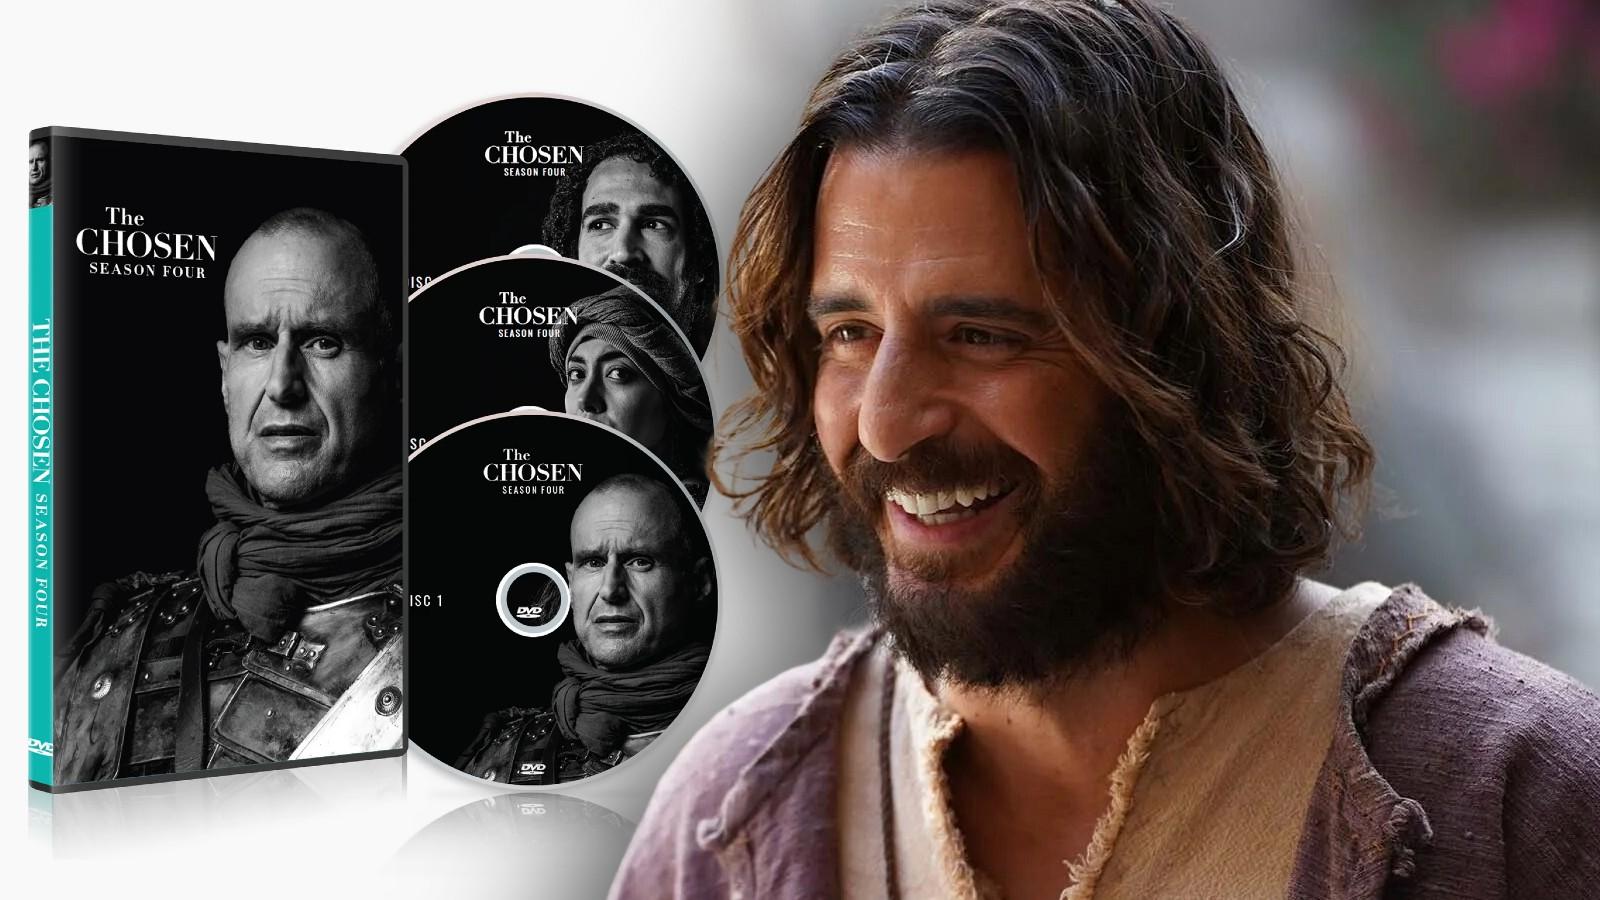 The Chosen Season 4 DVD and Jonathan Roumie as Jesus